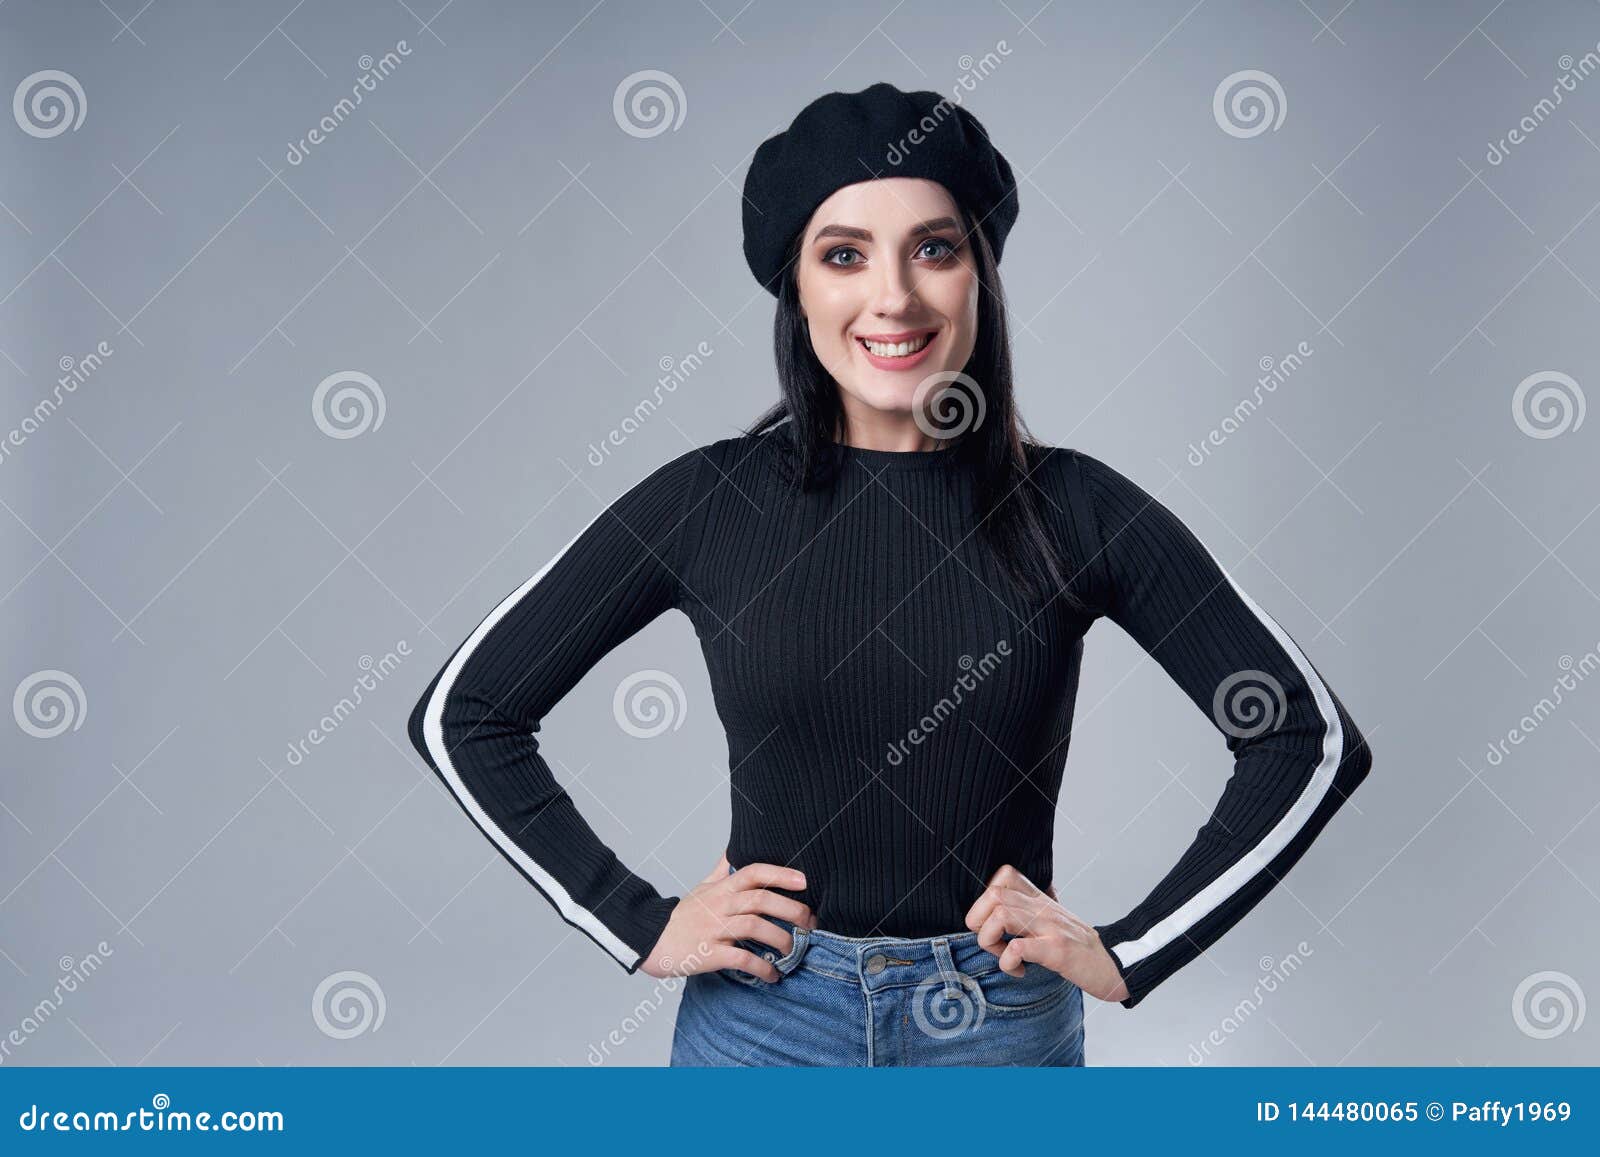 Portrait of Brunette Smiling Girl in Beret Stock Image - Image of ...